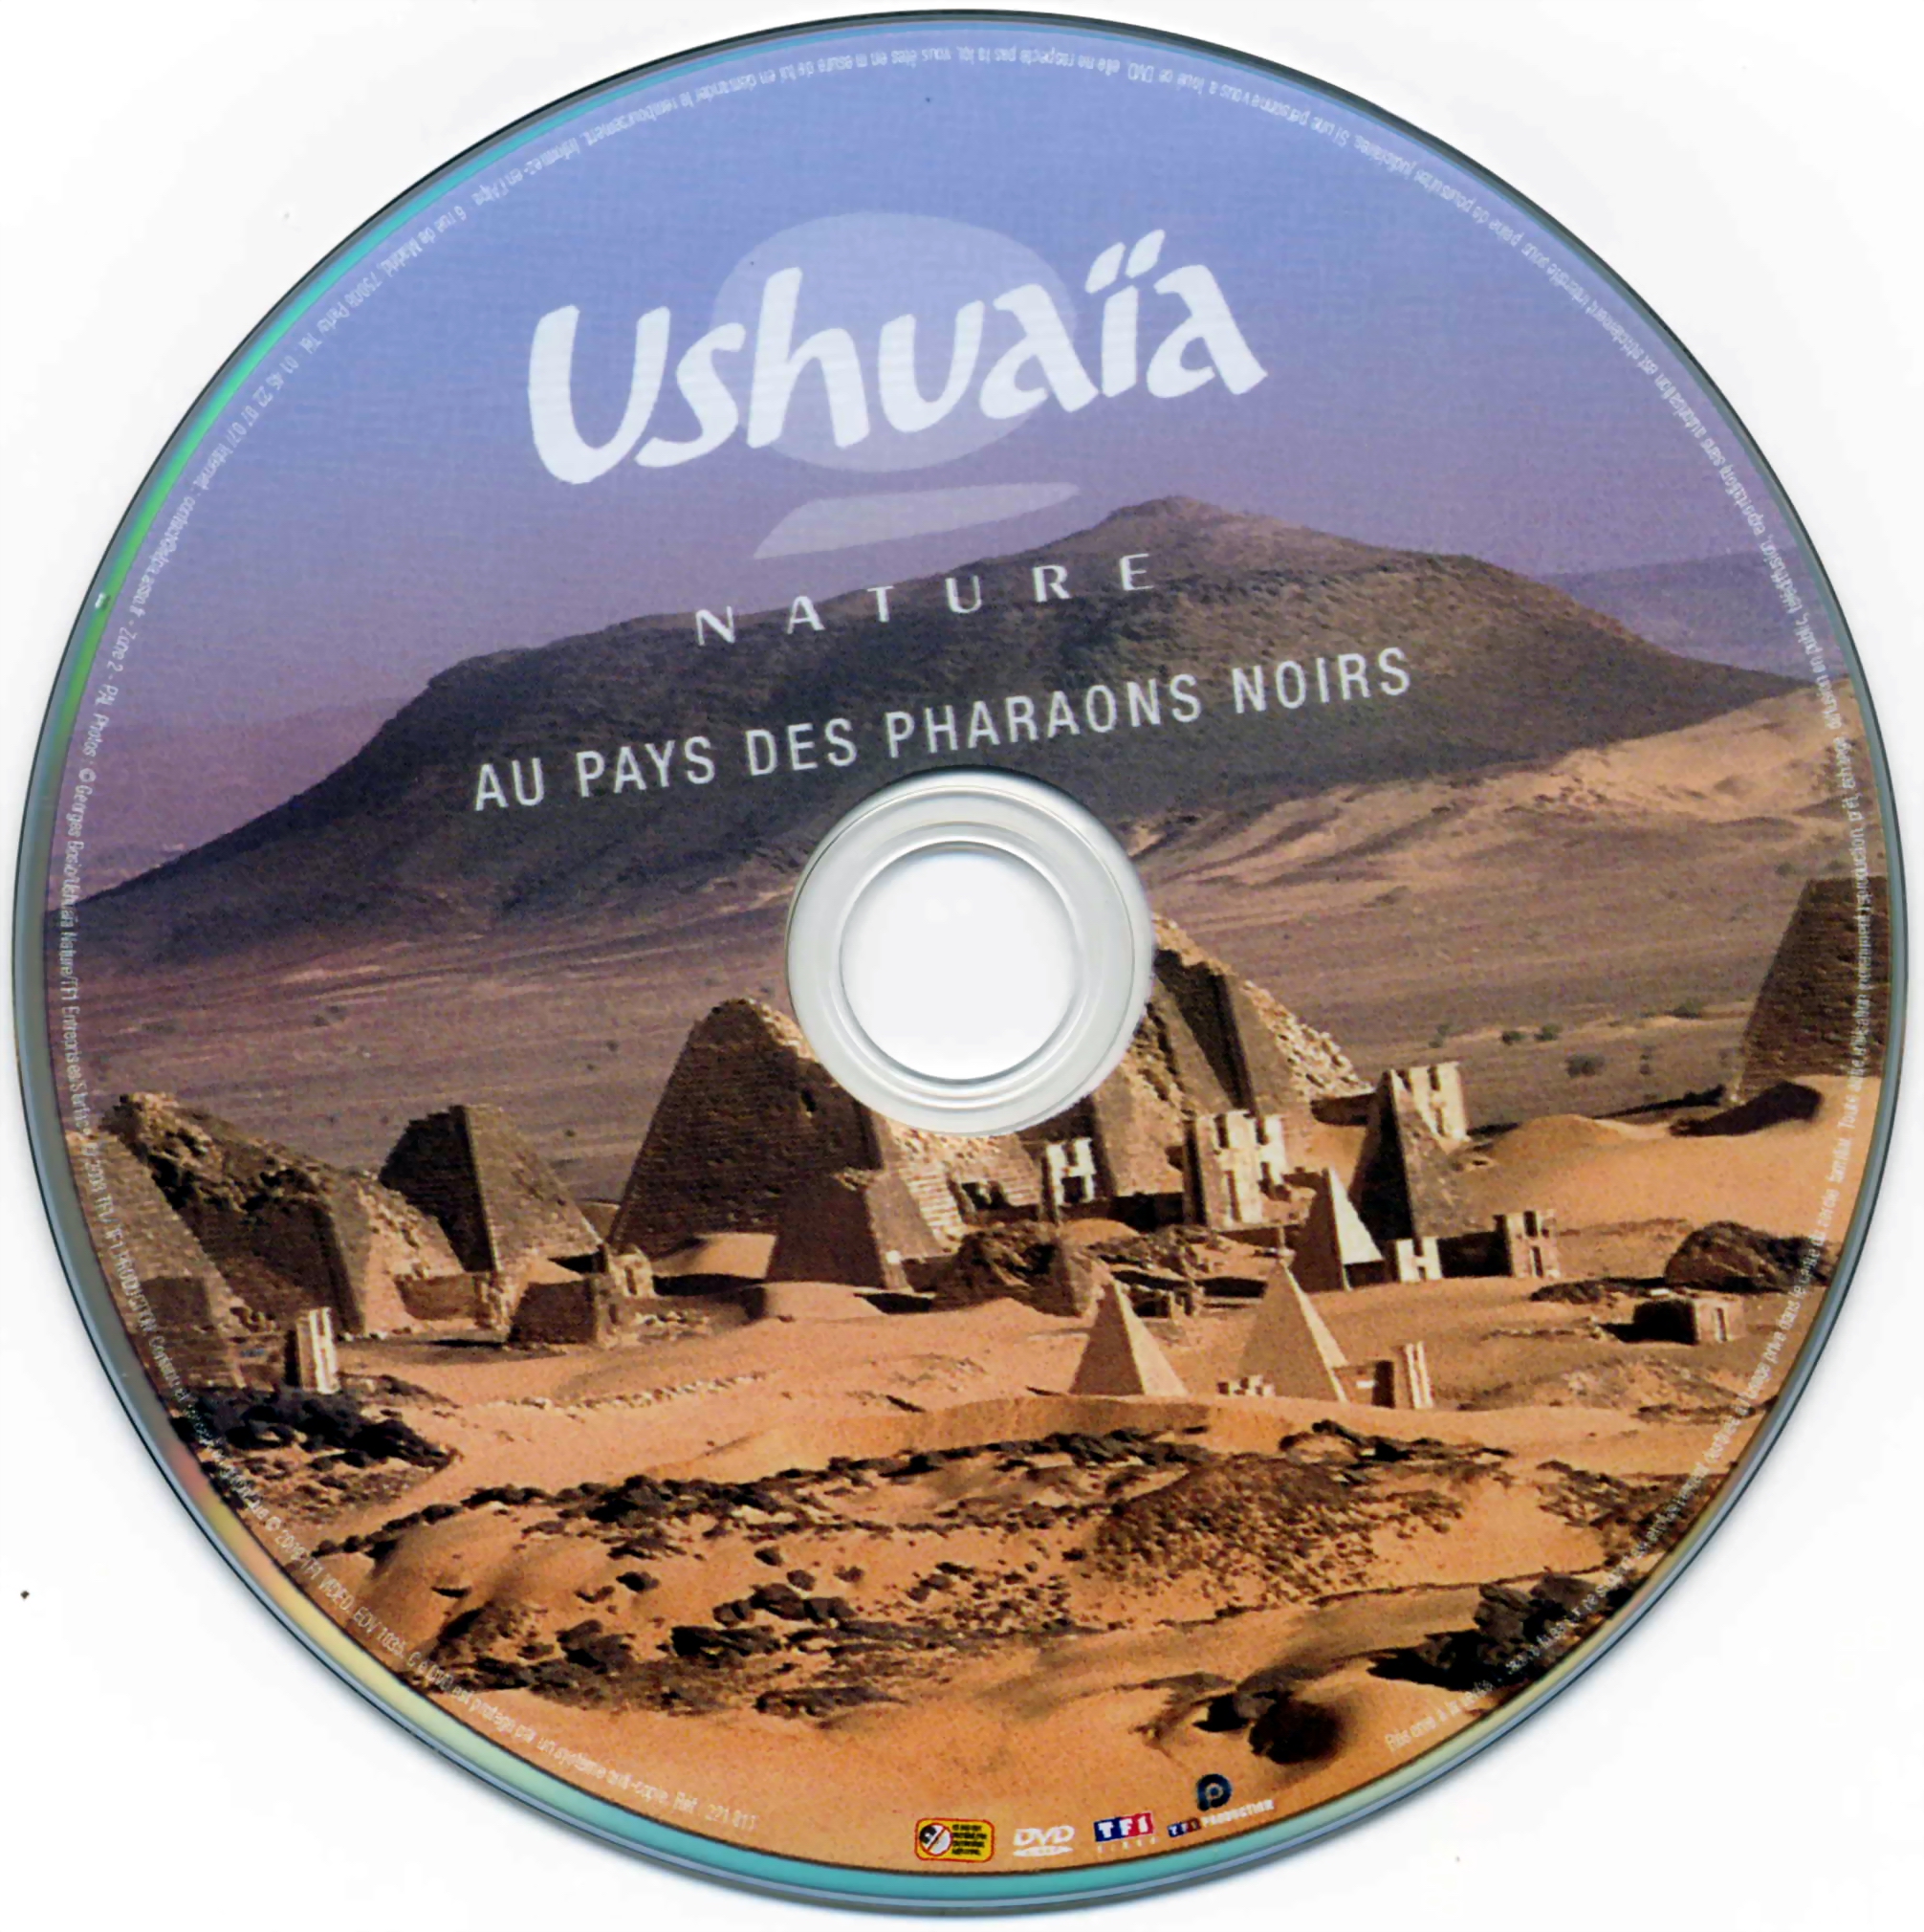 Ushuaia Nature - Au pays des Pharaons noirs